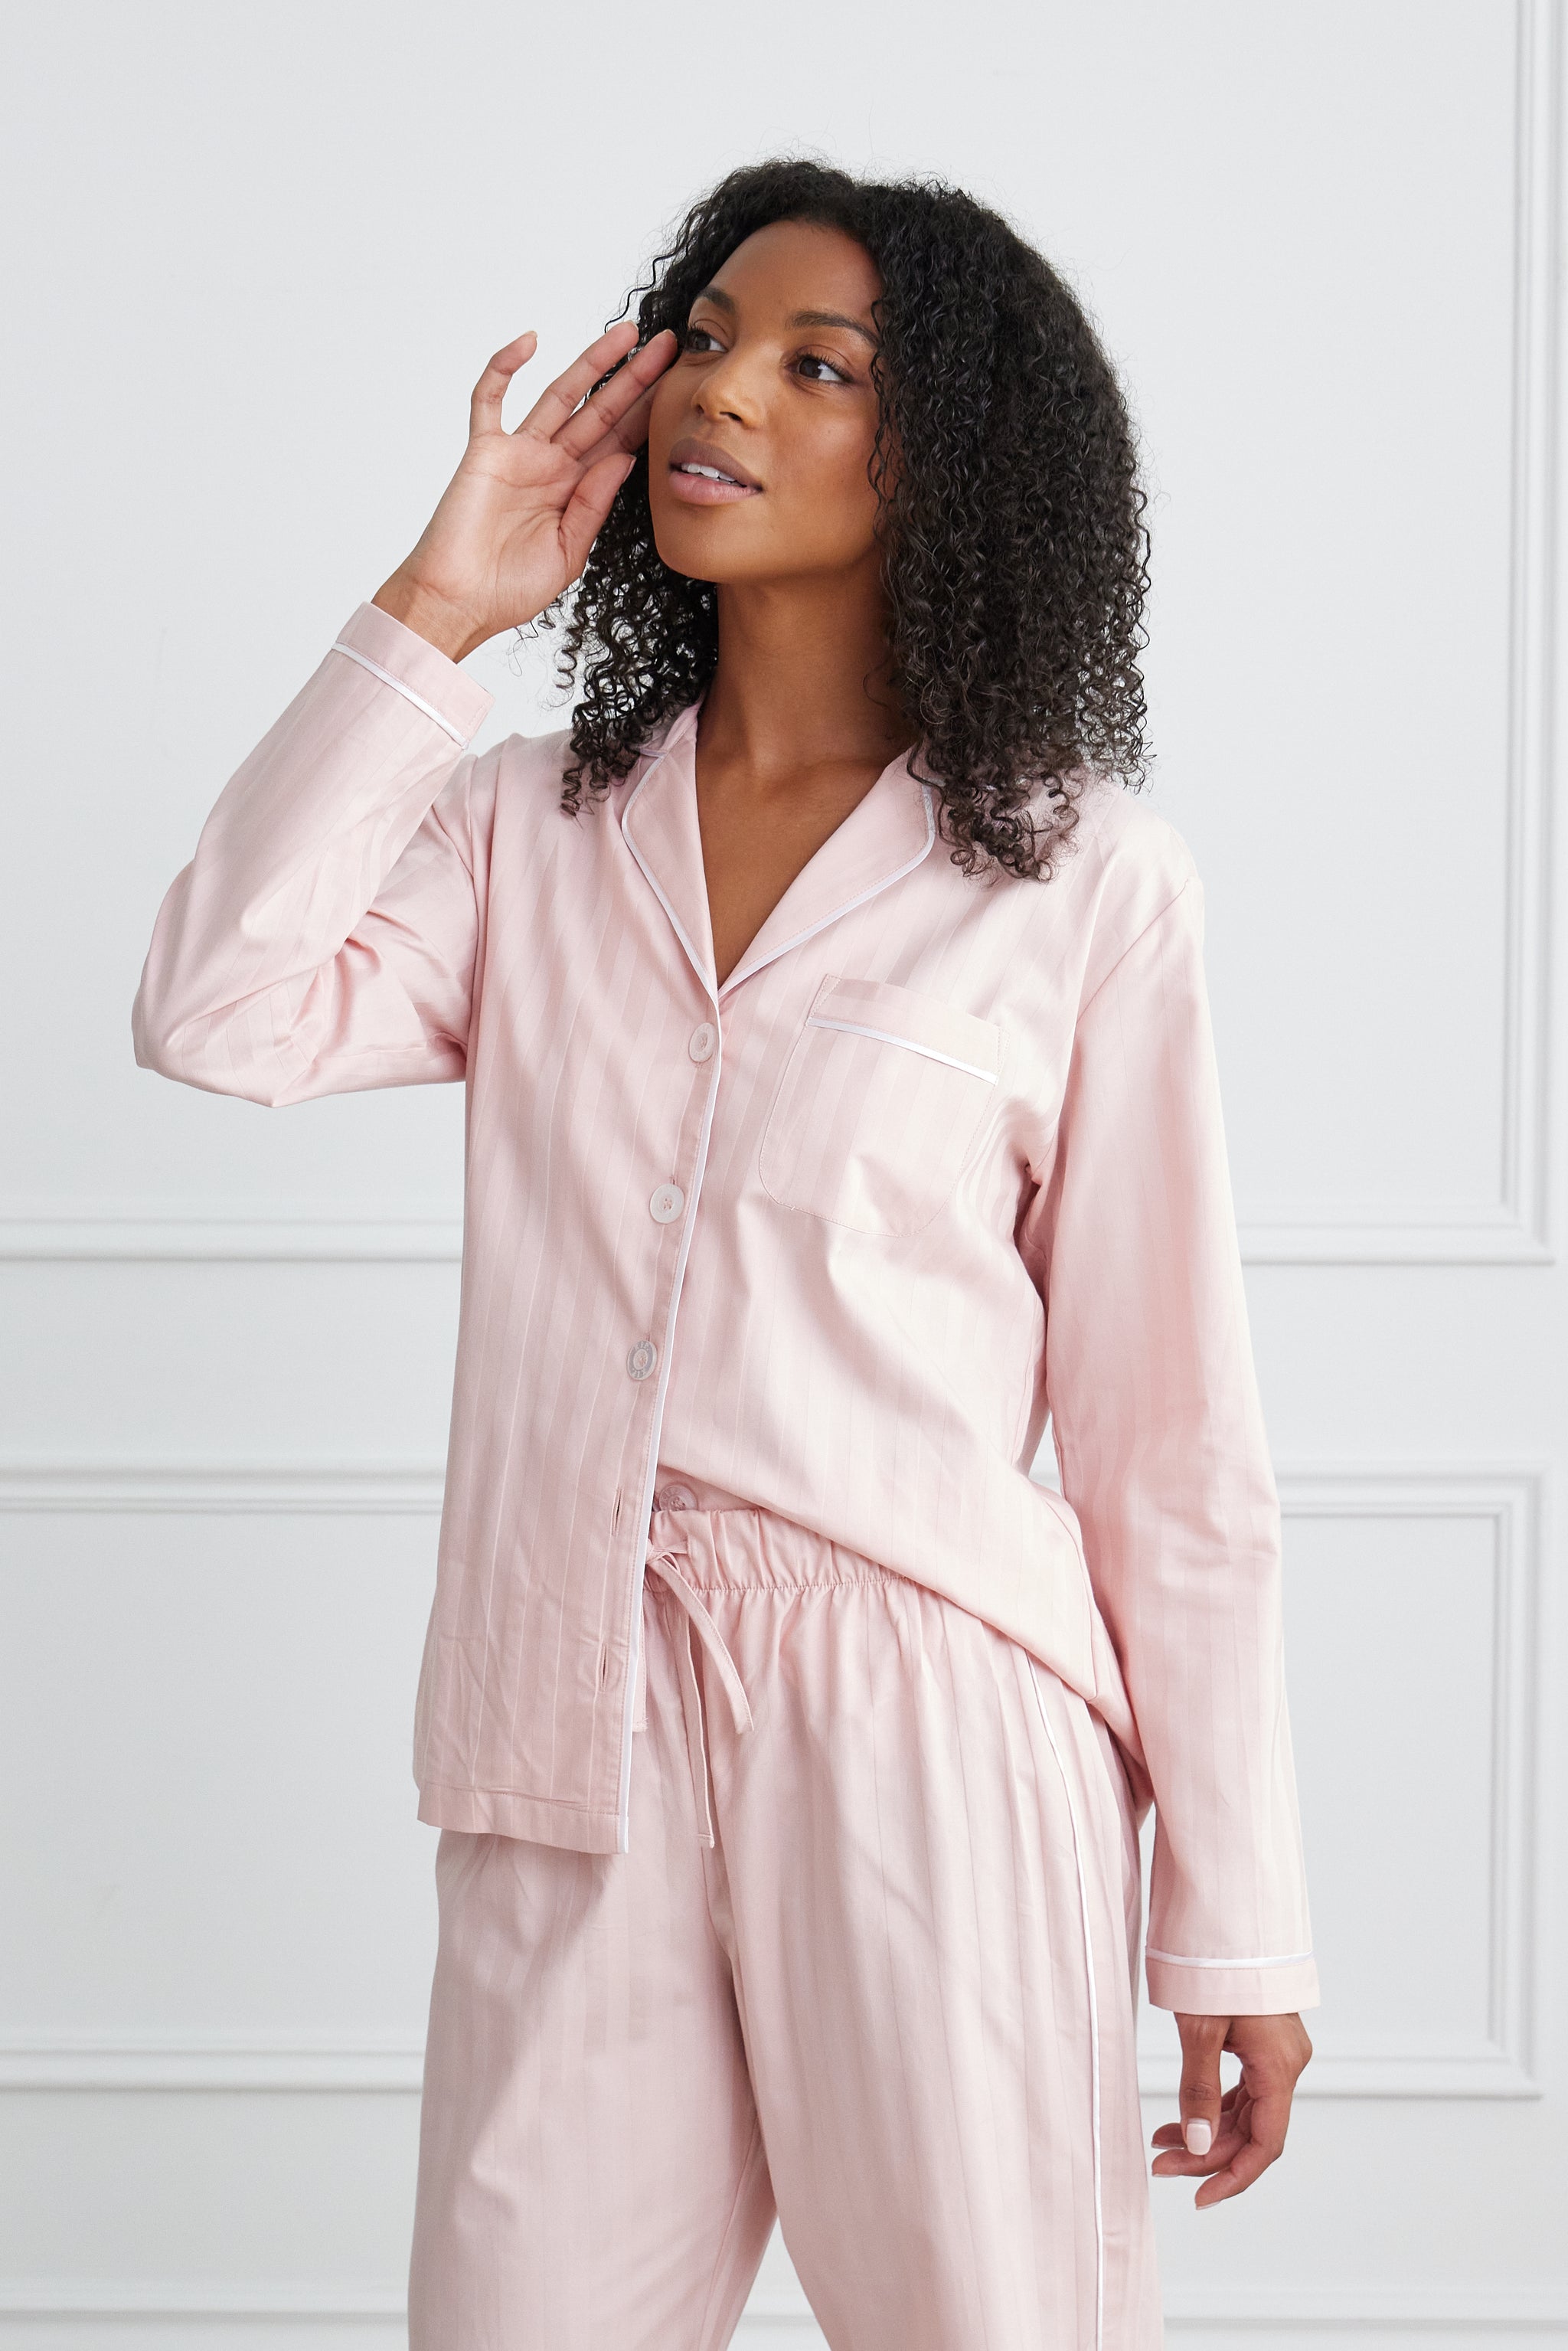 KIP. Women's Premium Cotton Classic Pajama Set in Lily White